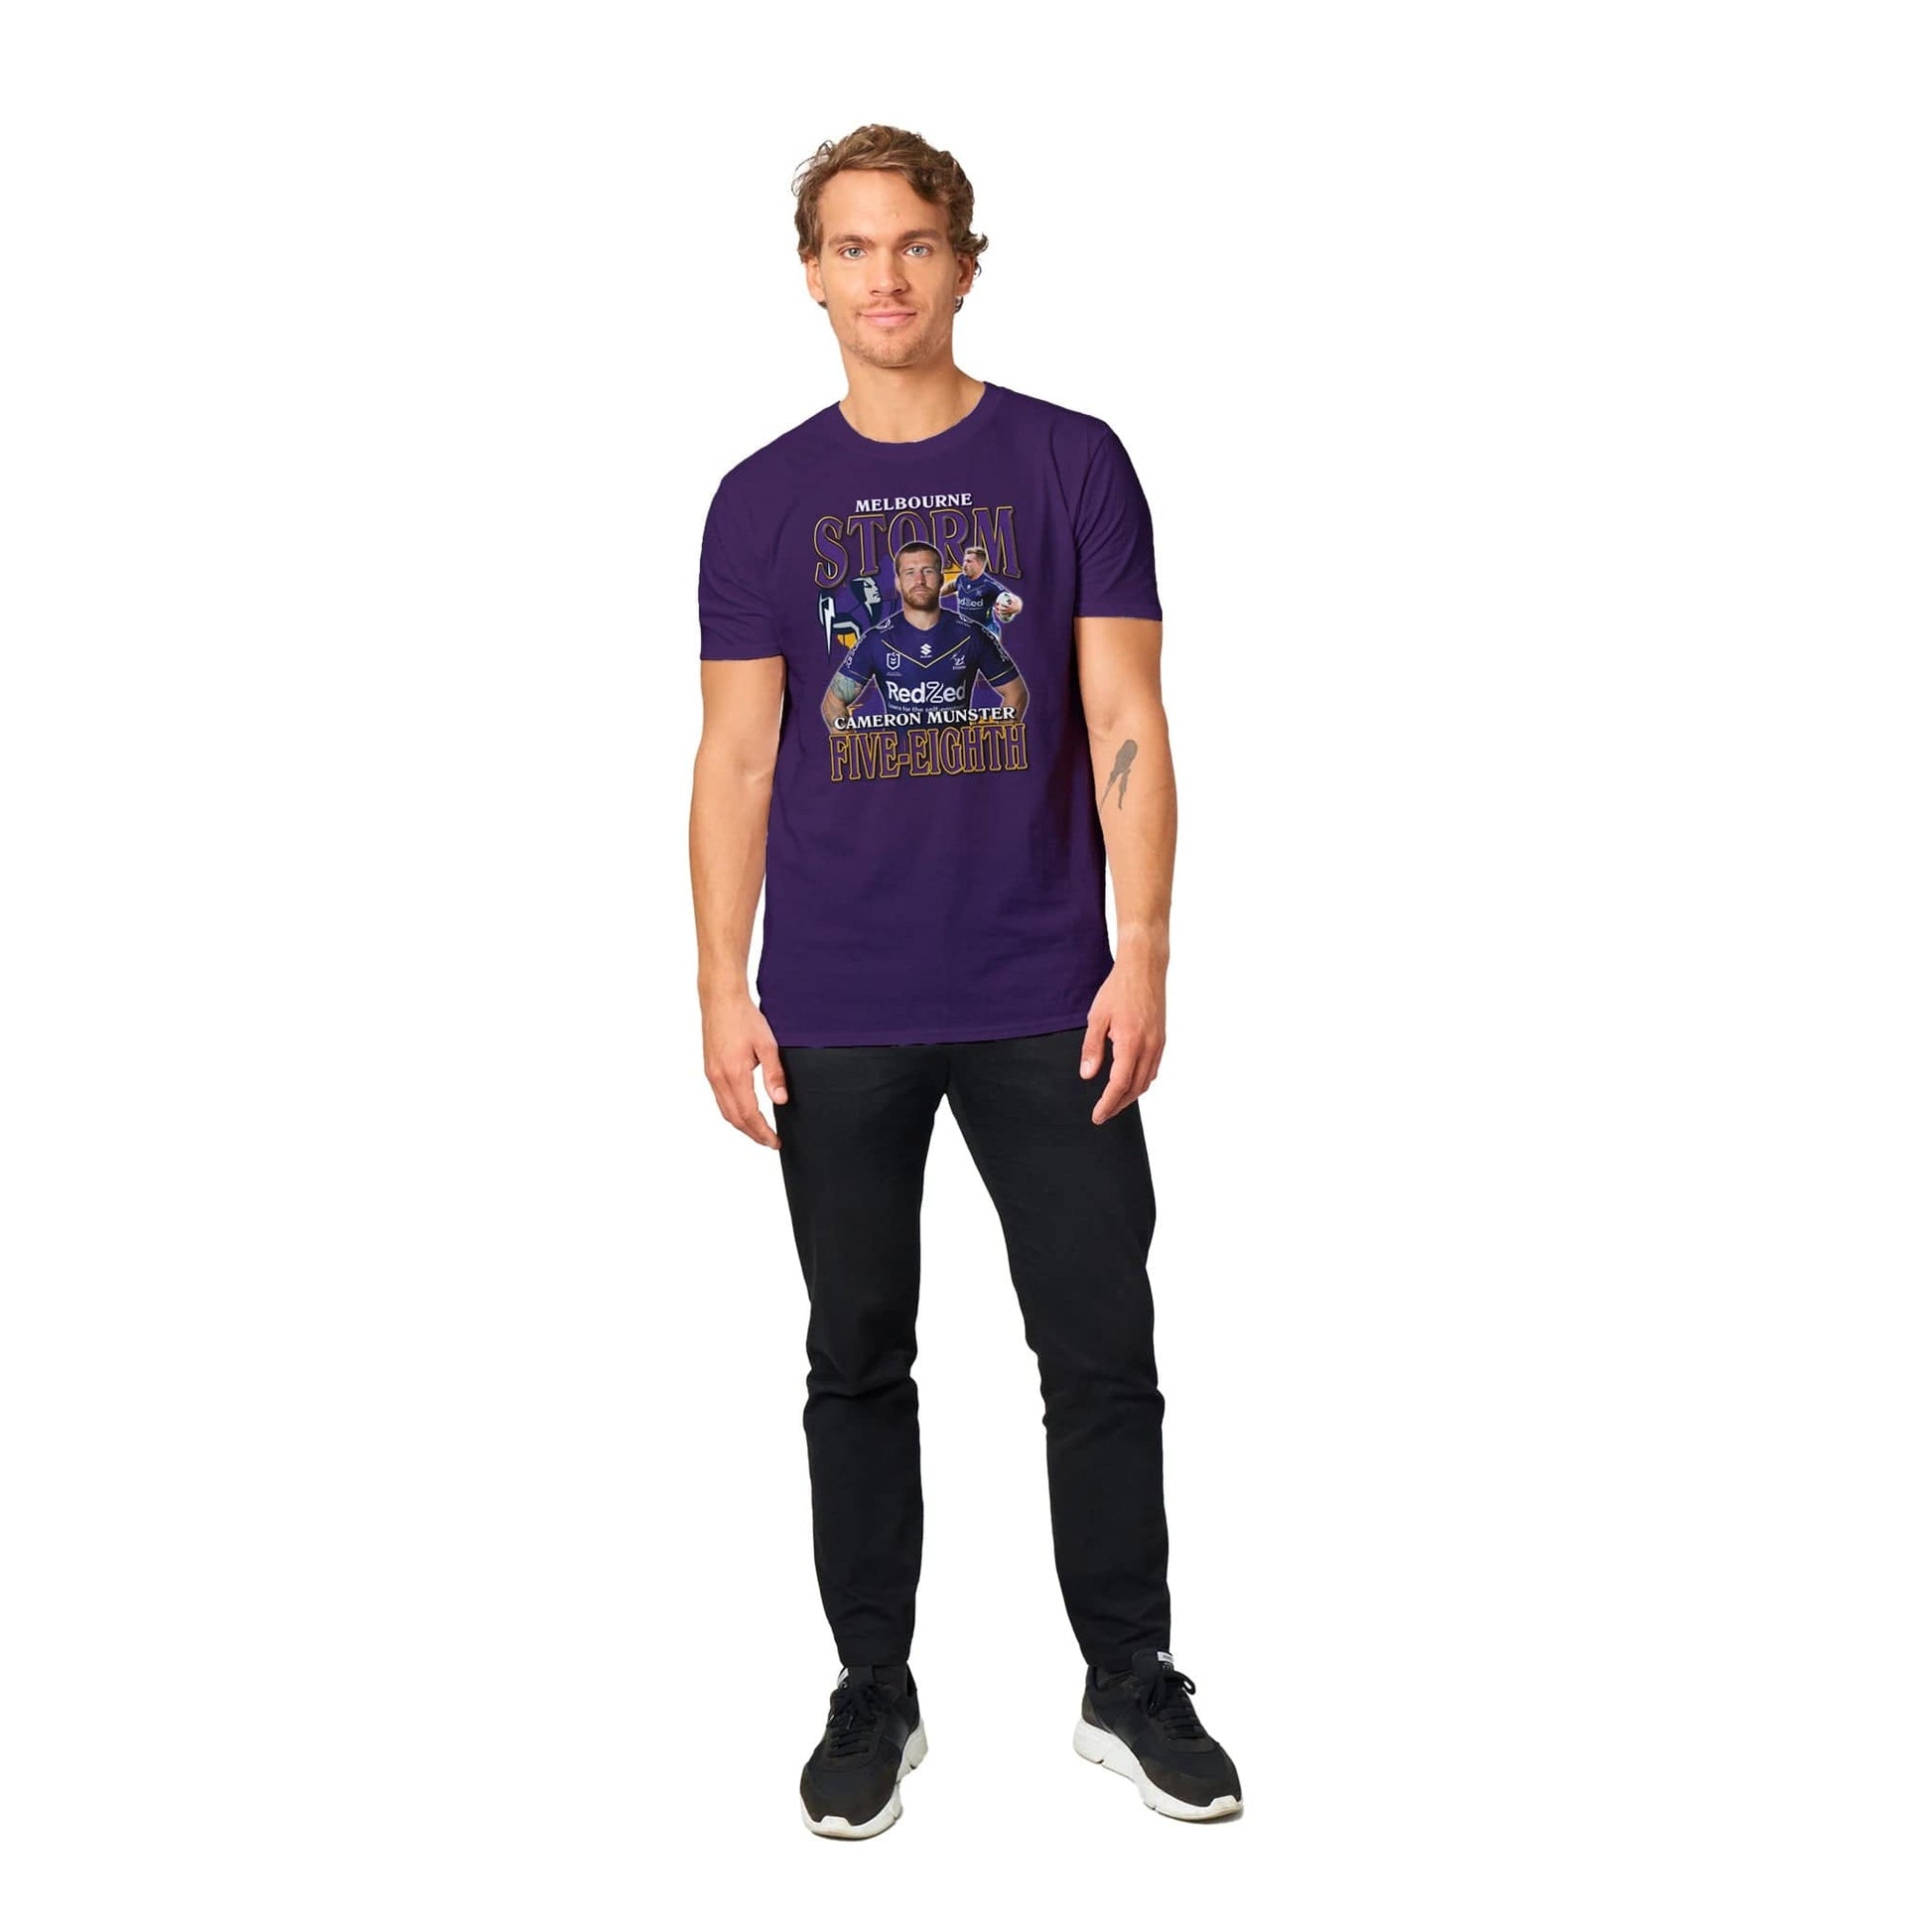 Cameron Munster T-shirt Australia Online Color